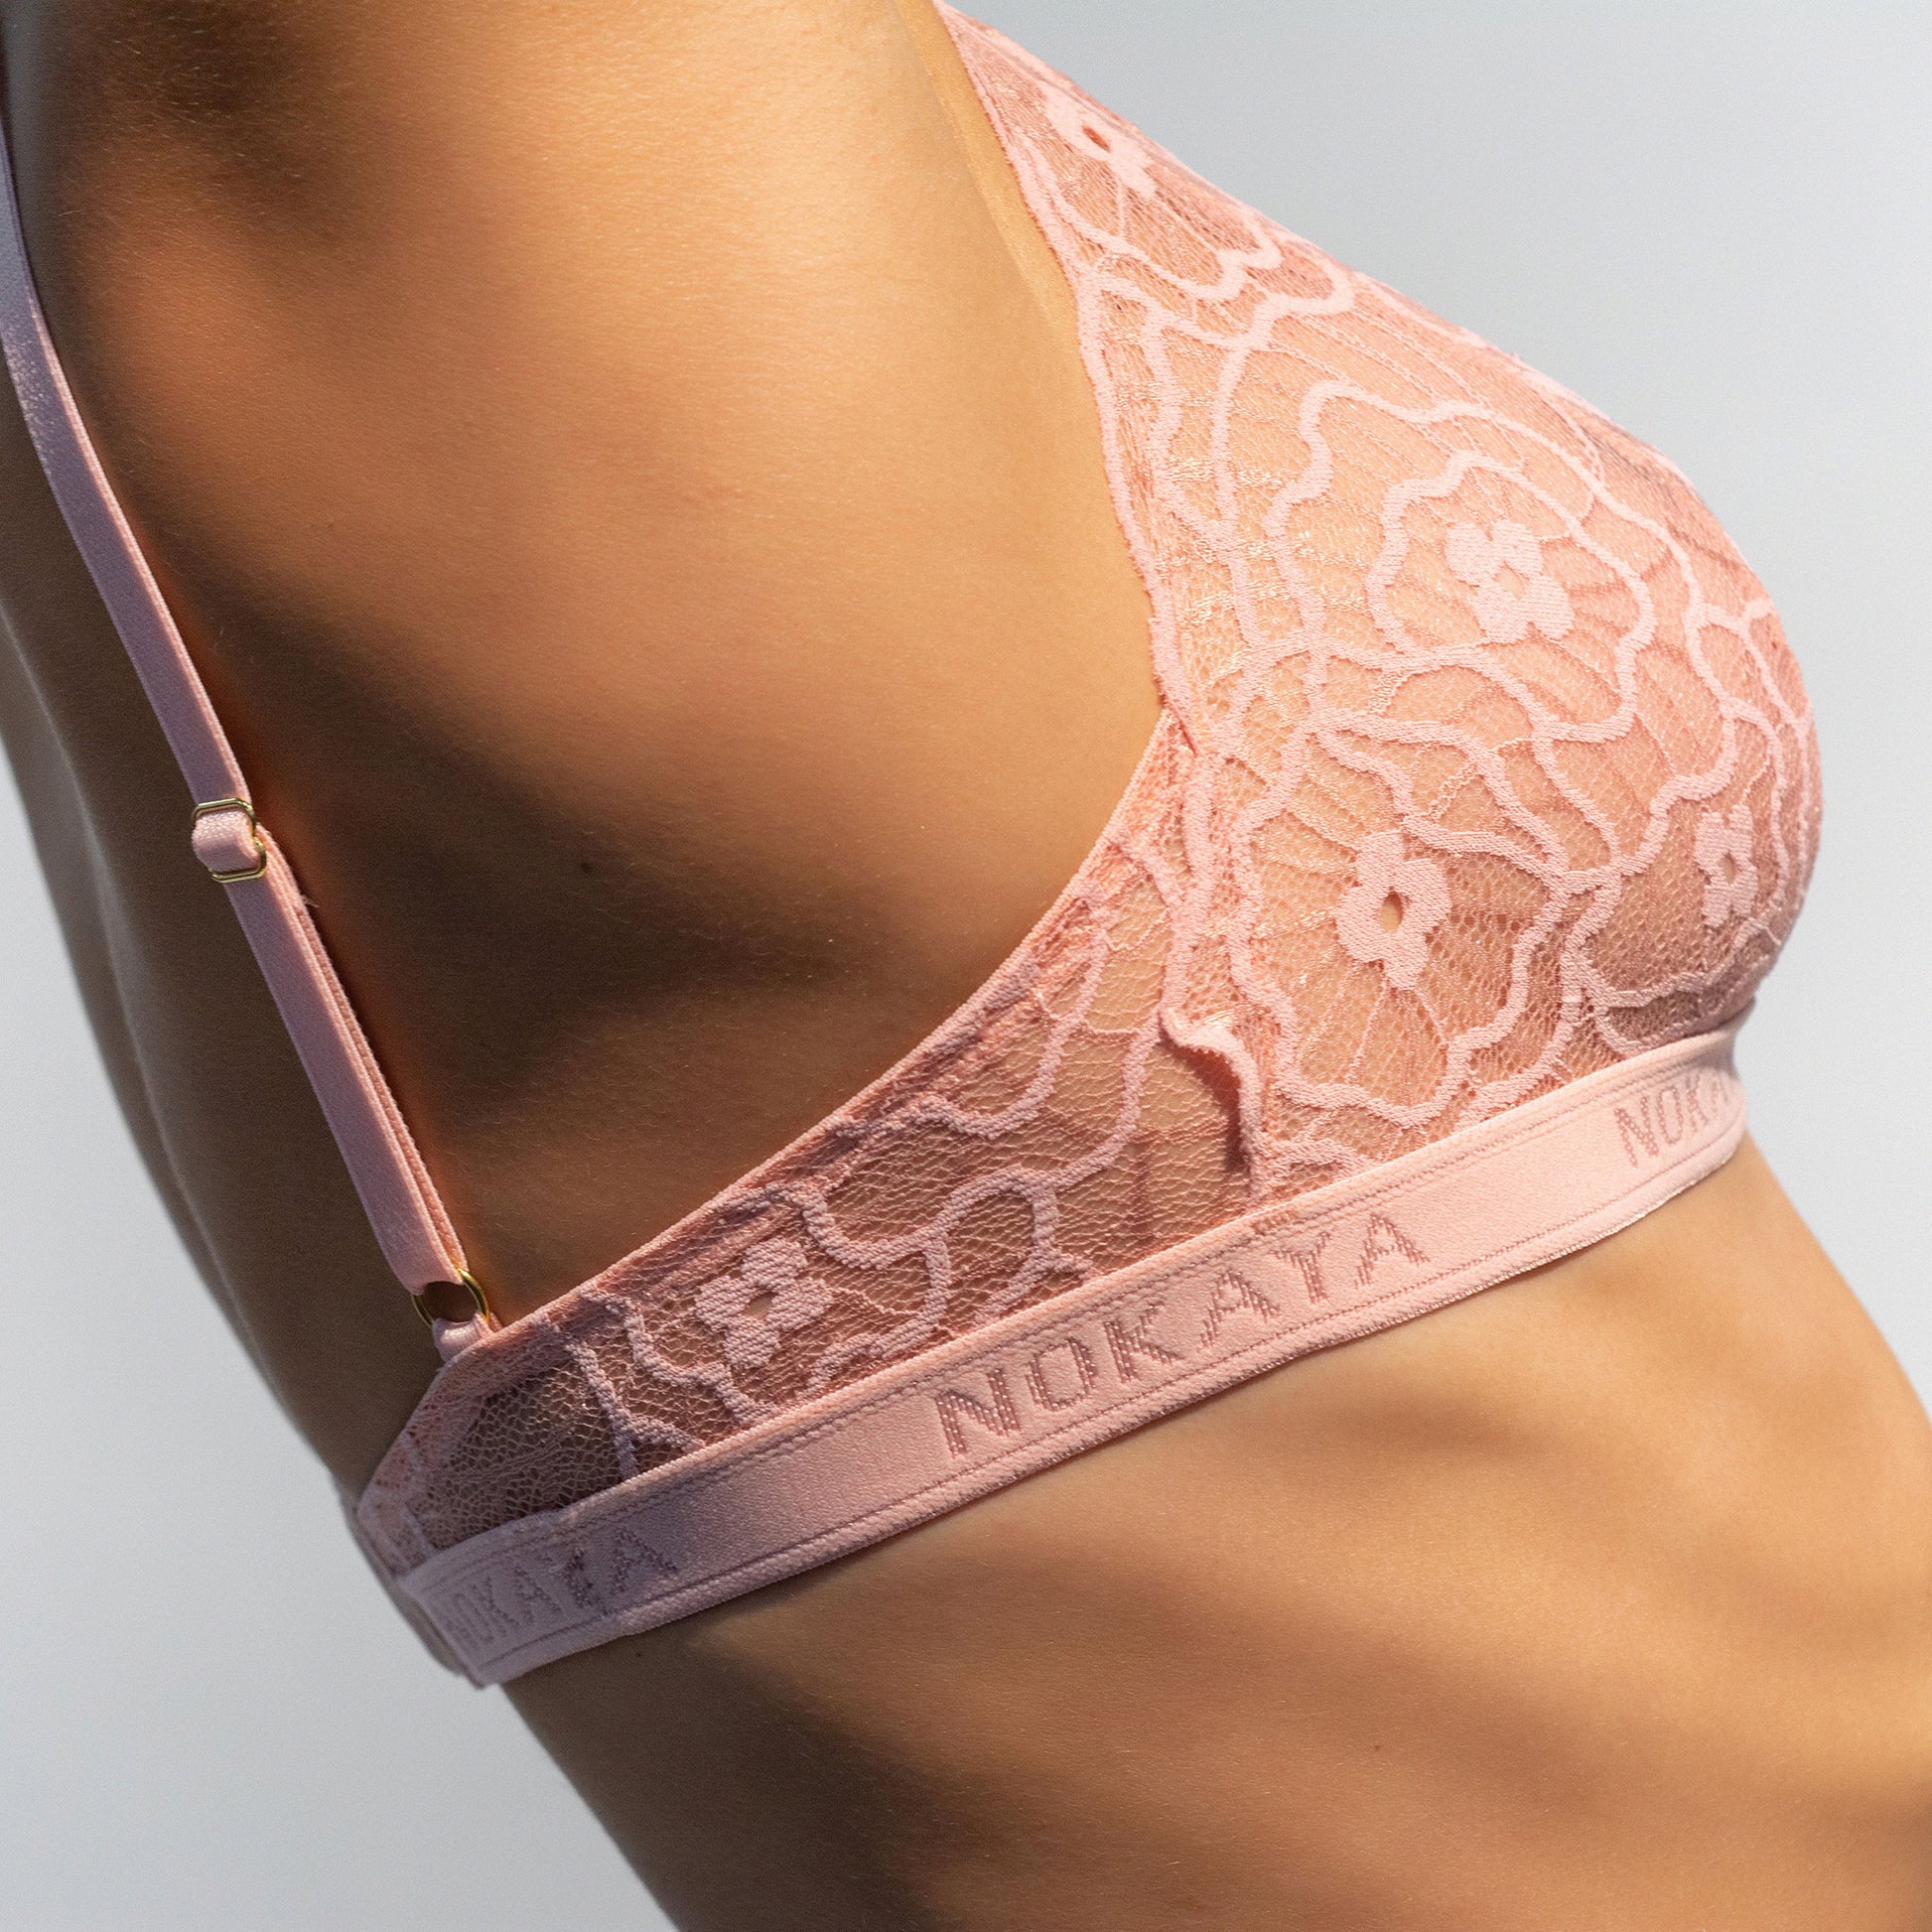 Nokaya modern pink lace image bralette with the elastic logo tape.